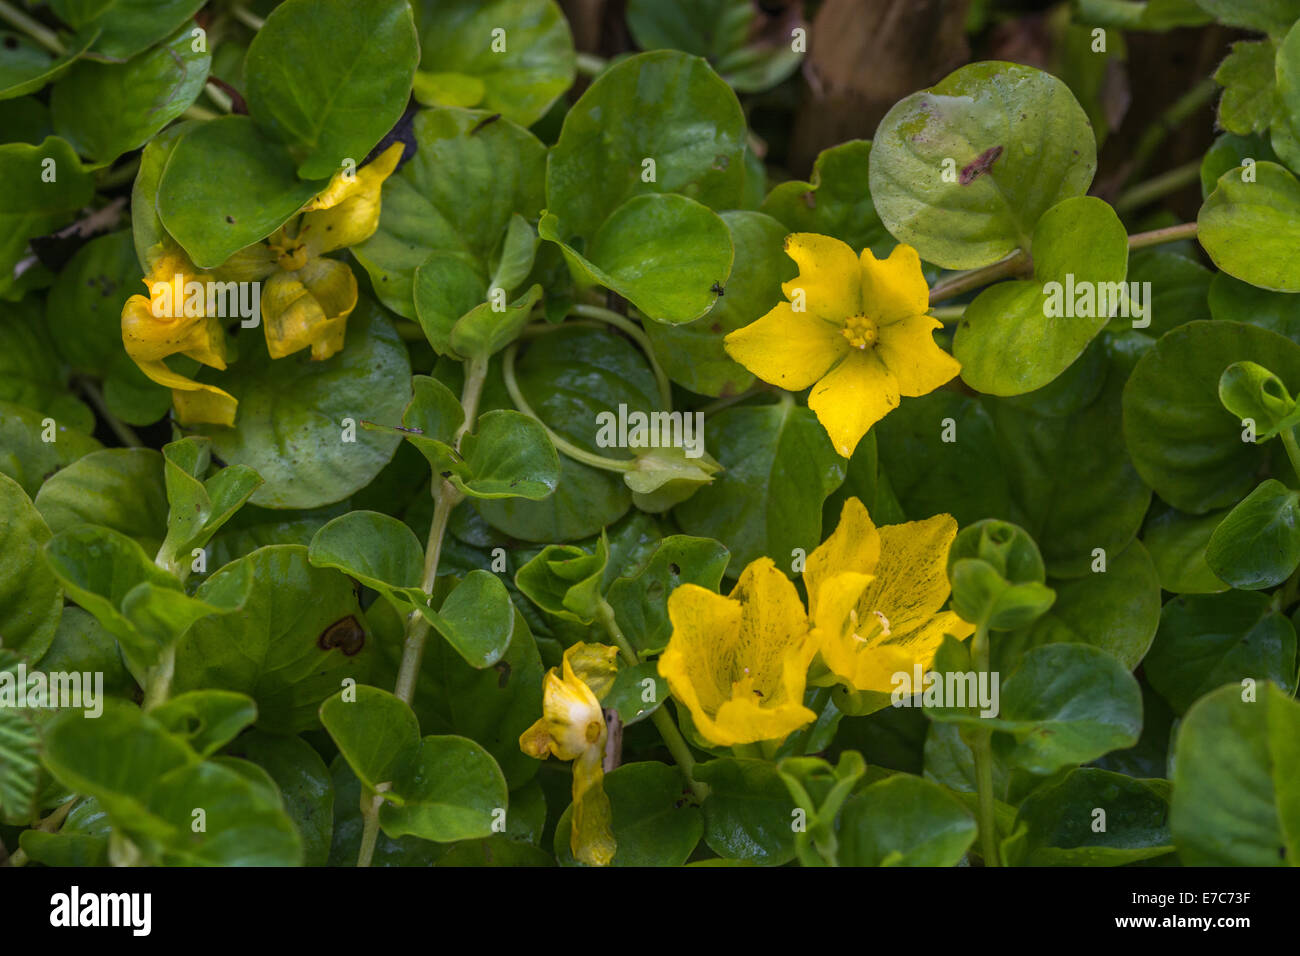 Creeping Jenny / Lysimachia nummularia flowers and foliage. The similarly flowered Yellow Pimpernel / Lysimachia nemorum has pointed ovate leaves. Stock Photo